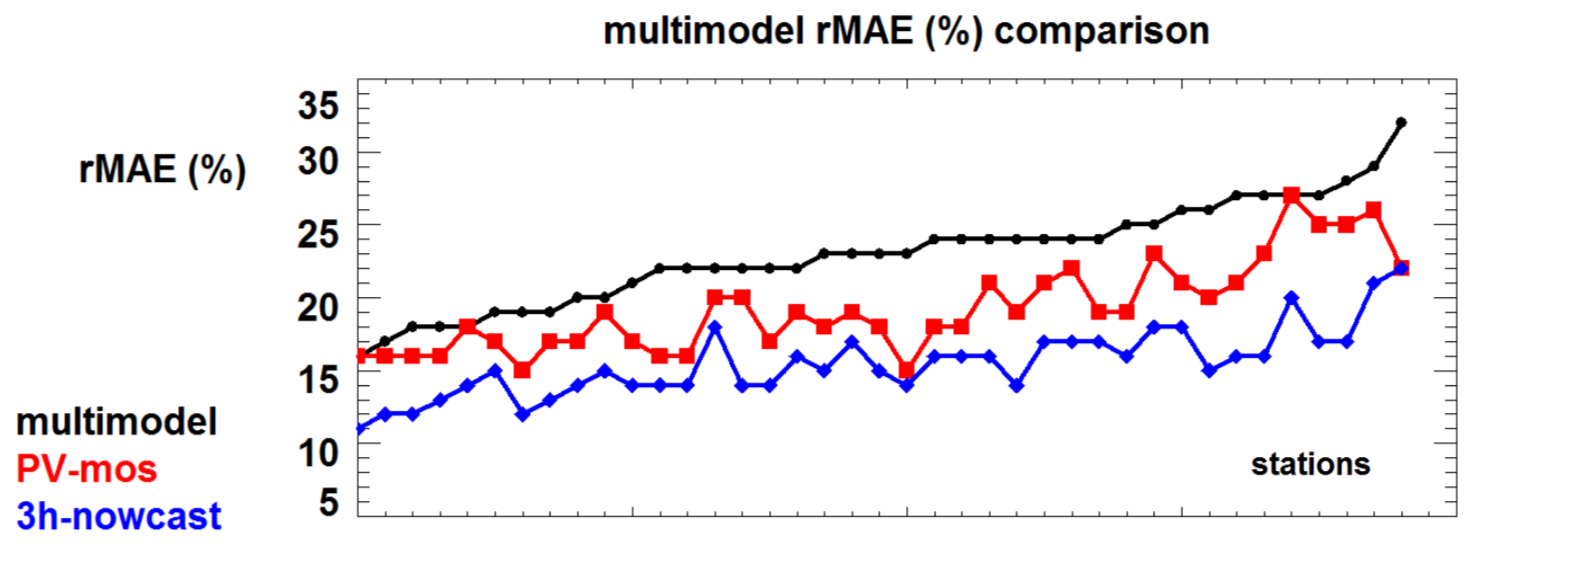 multimodel-rMAE-comparison